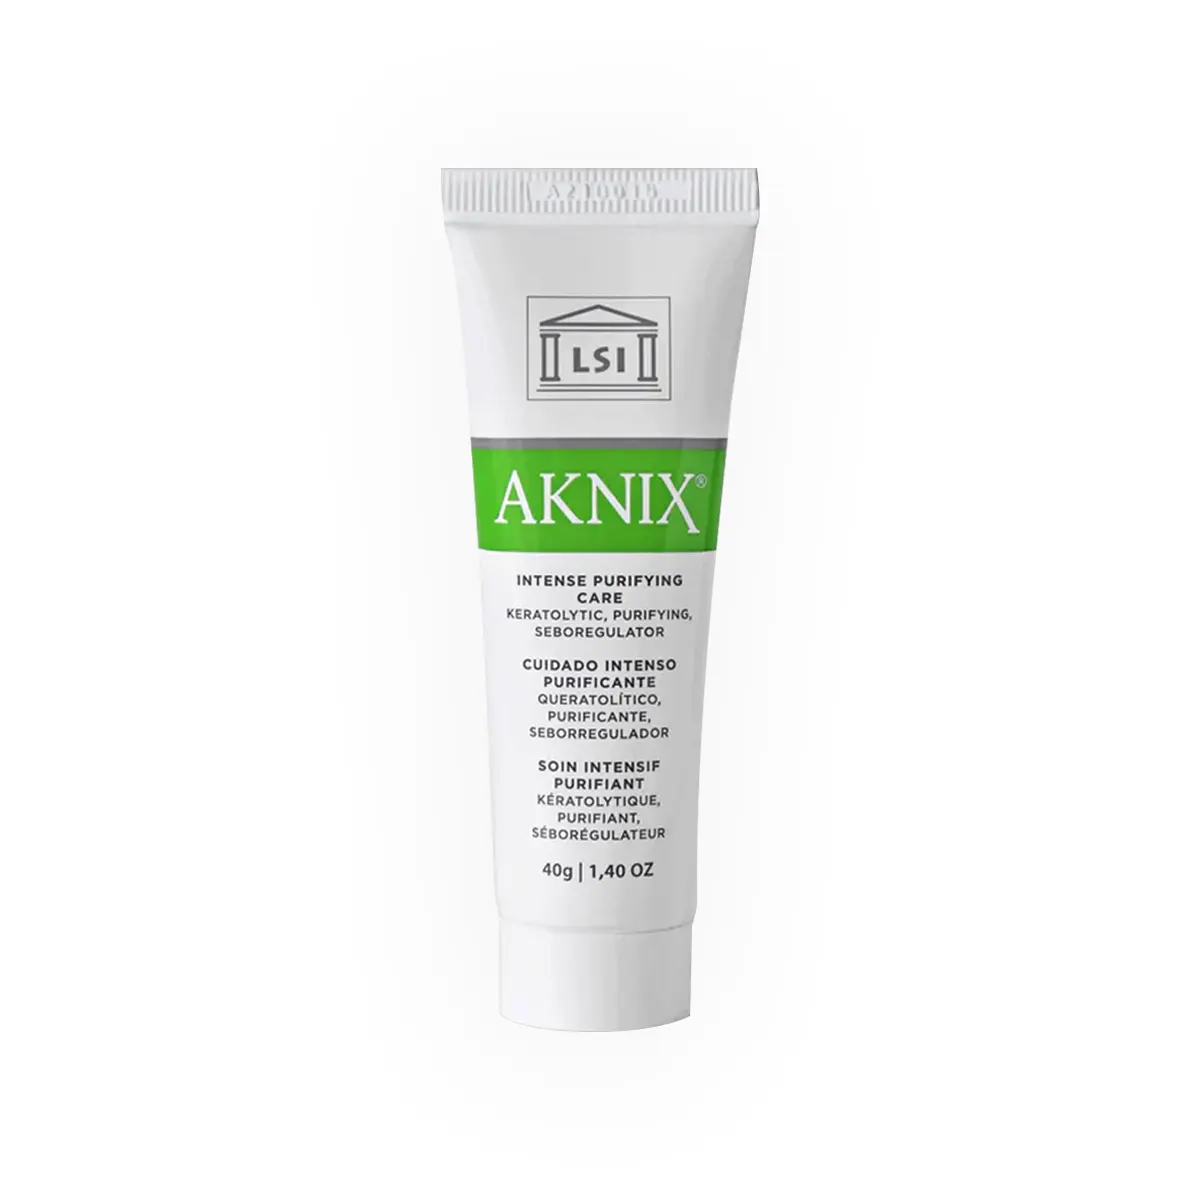 Aknix Intense Purifying Care cream 40g